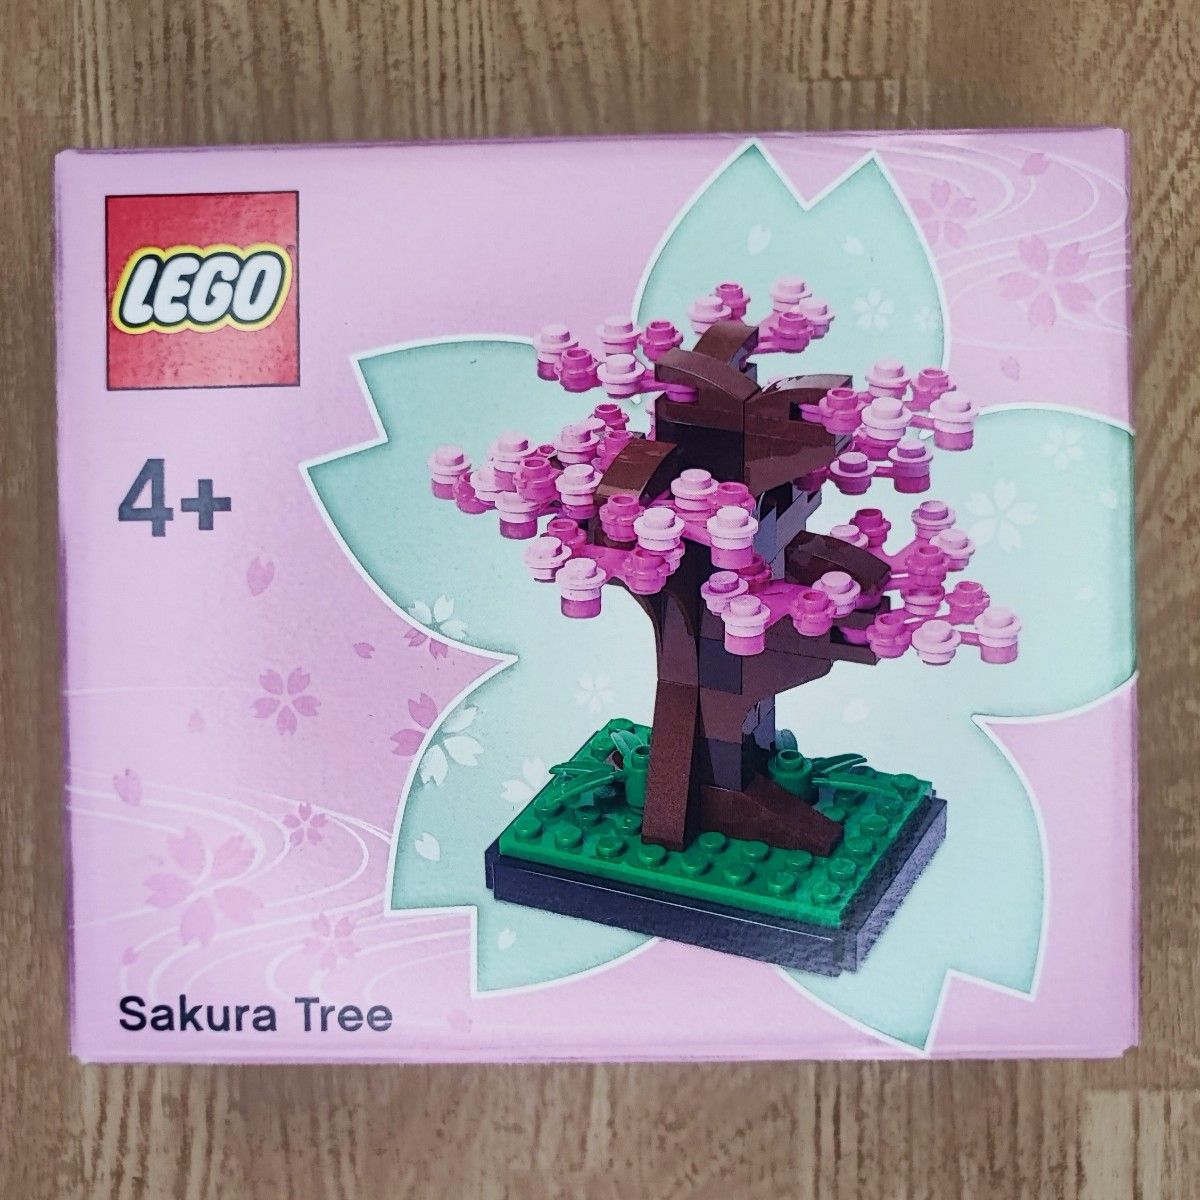 46　LEGO Sakura Tree レゴ さくらの木 サクラの木 桜 桜の木